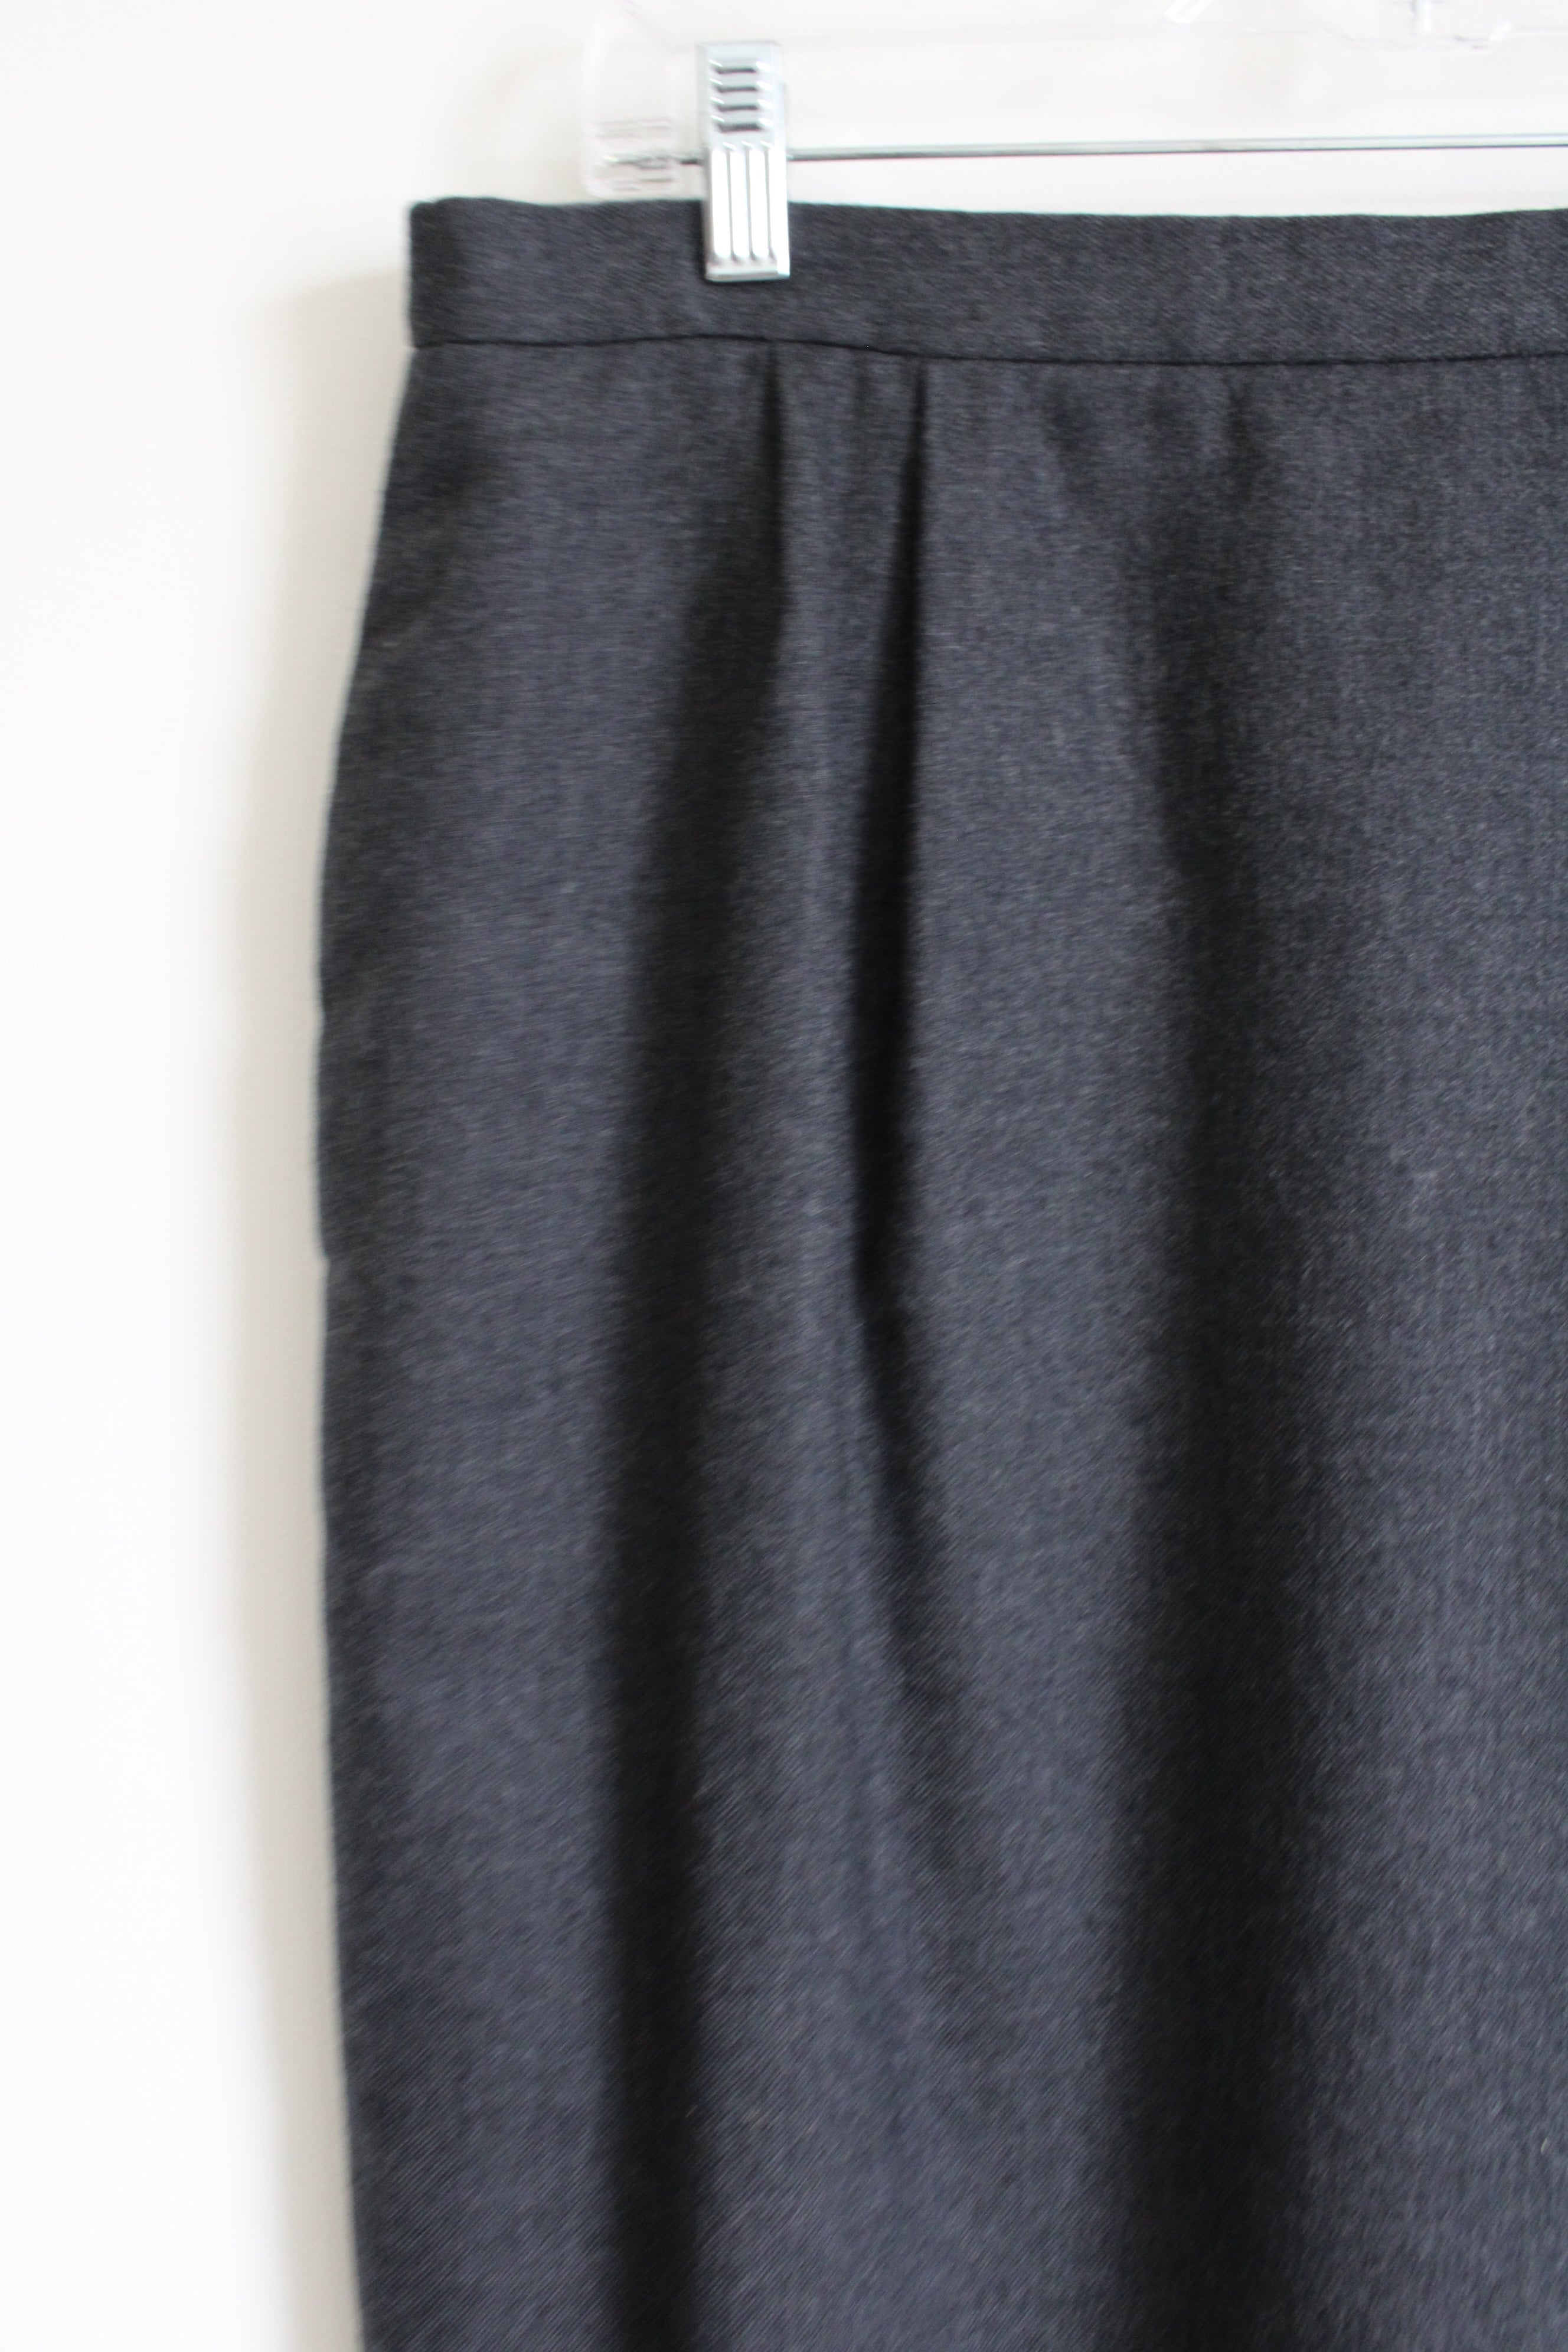 Lands' End Gray Wool Vintage Pencil Skirt | 14